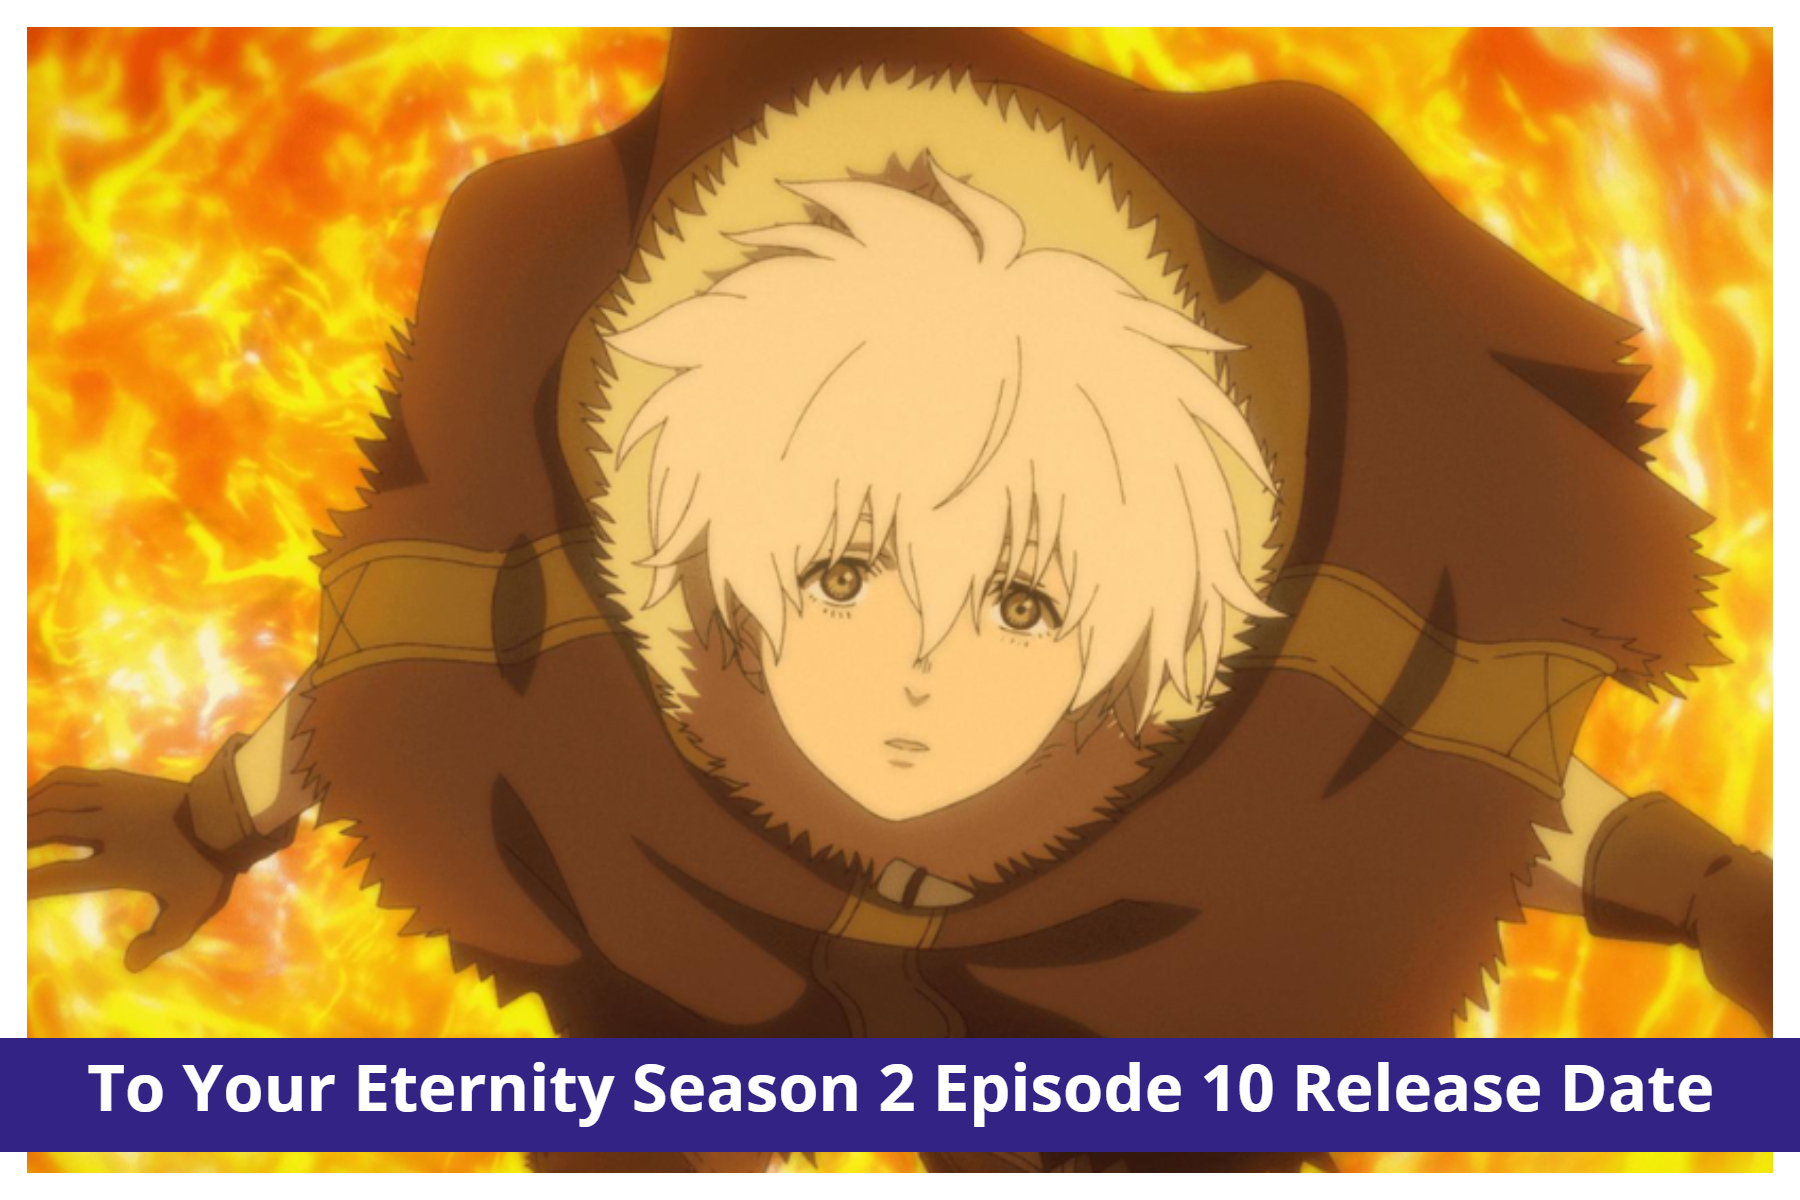 To Your Eternity Season 2 - Episode 10